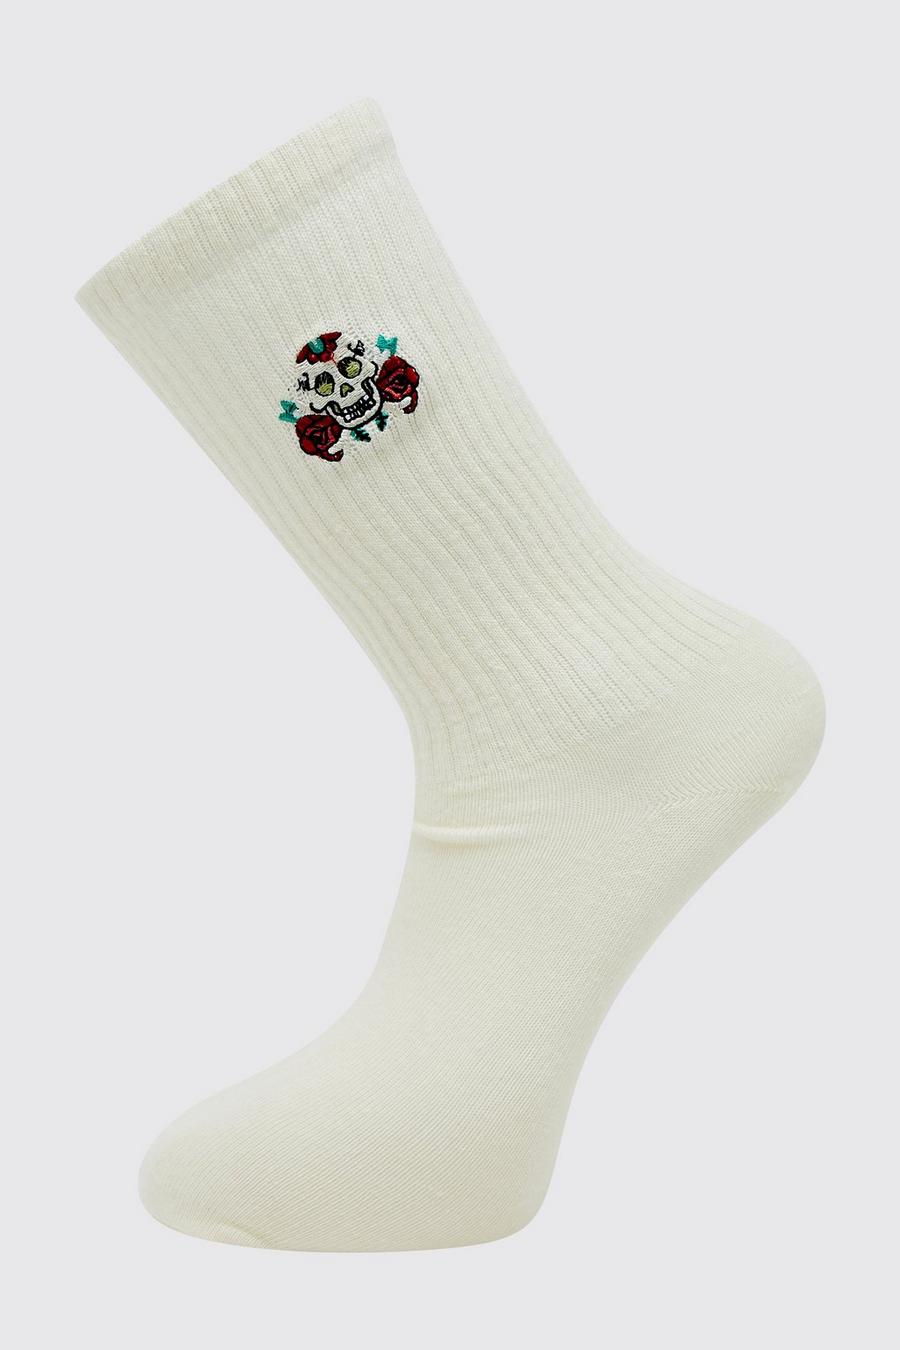 Ecru blanco 1 Pack Embroidery Floral Skull Sock